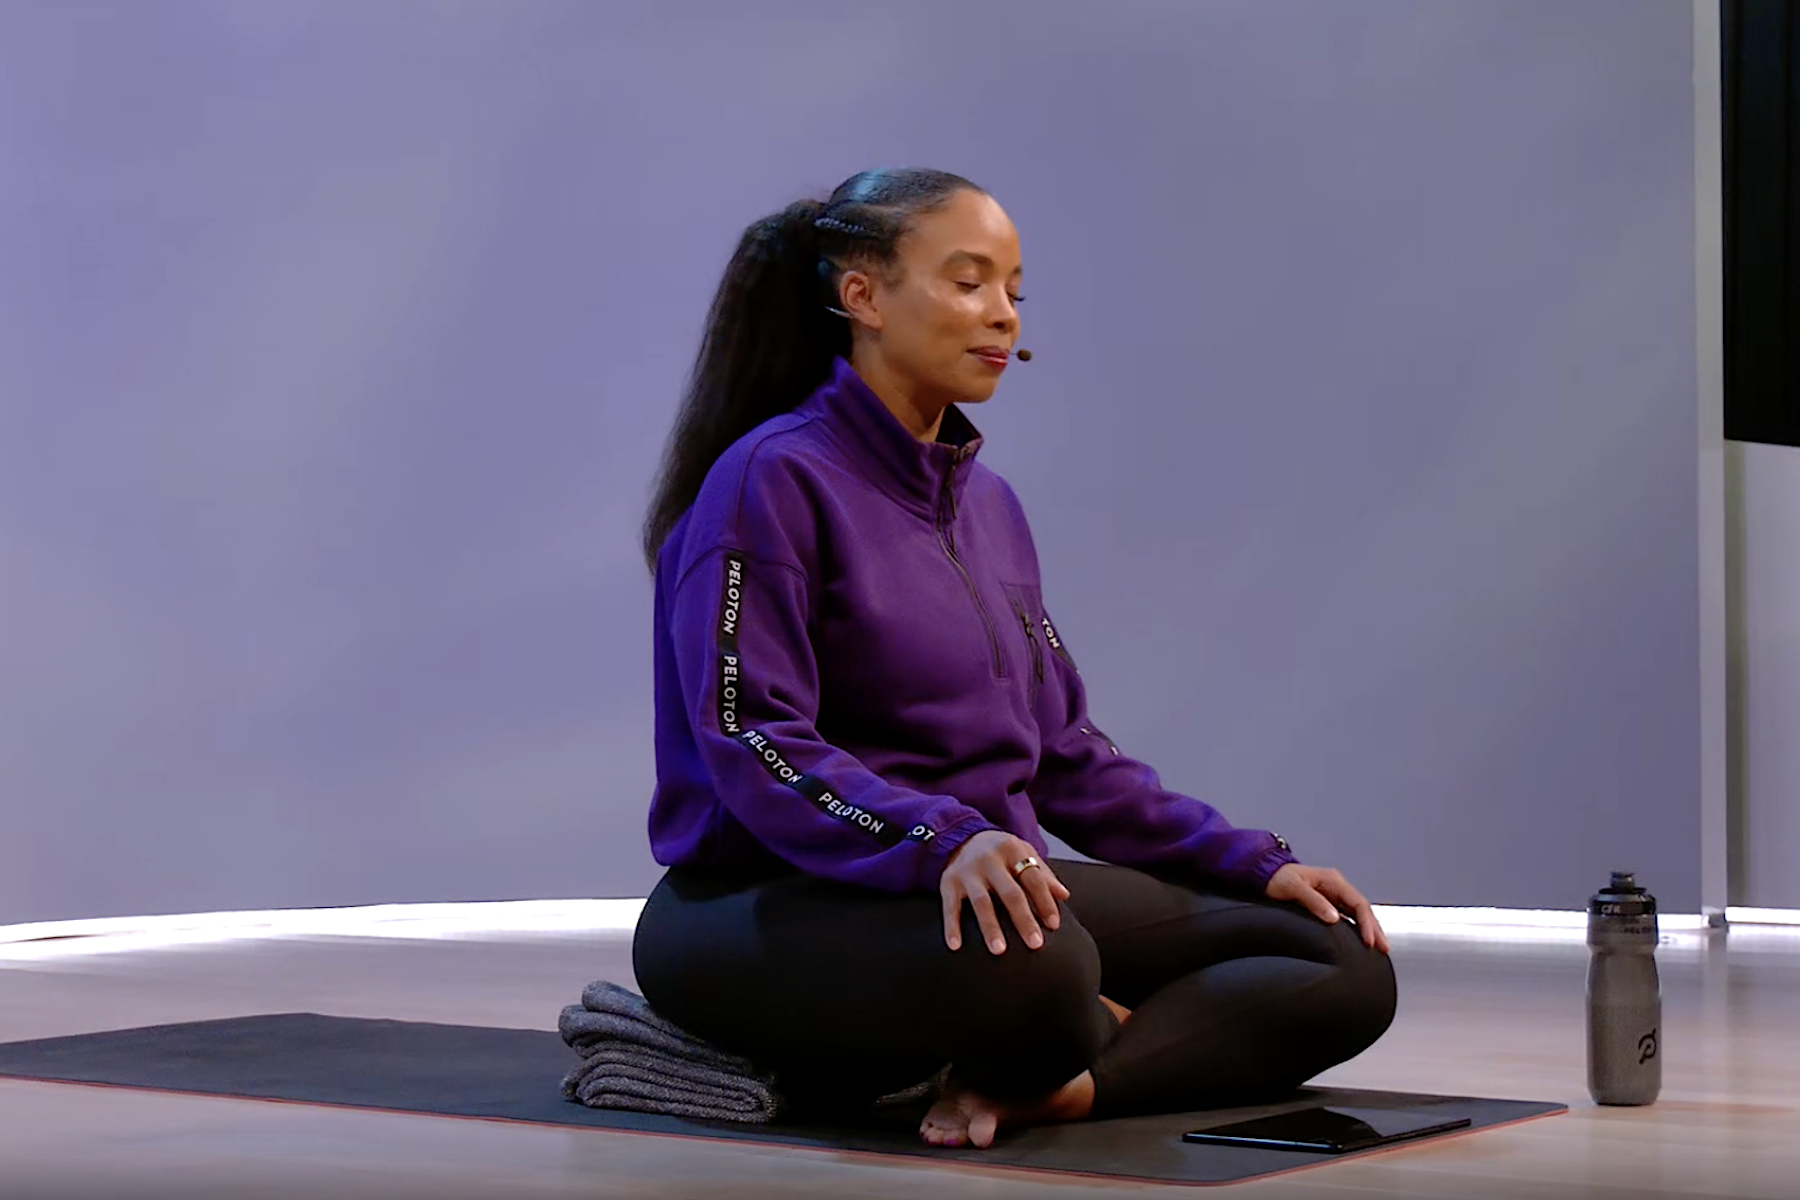 Chelsea Jackson Roberts meditating